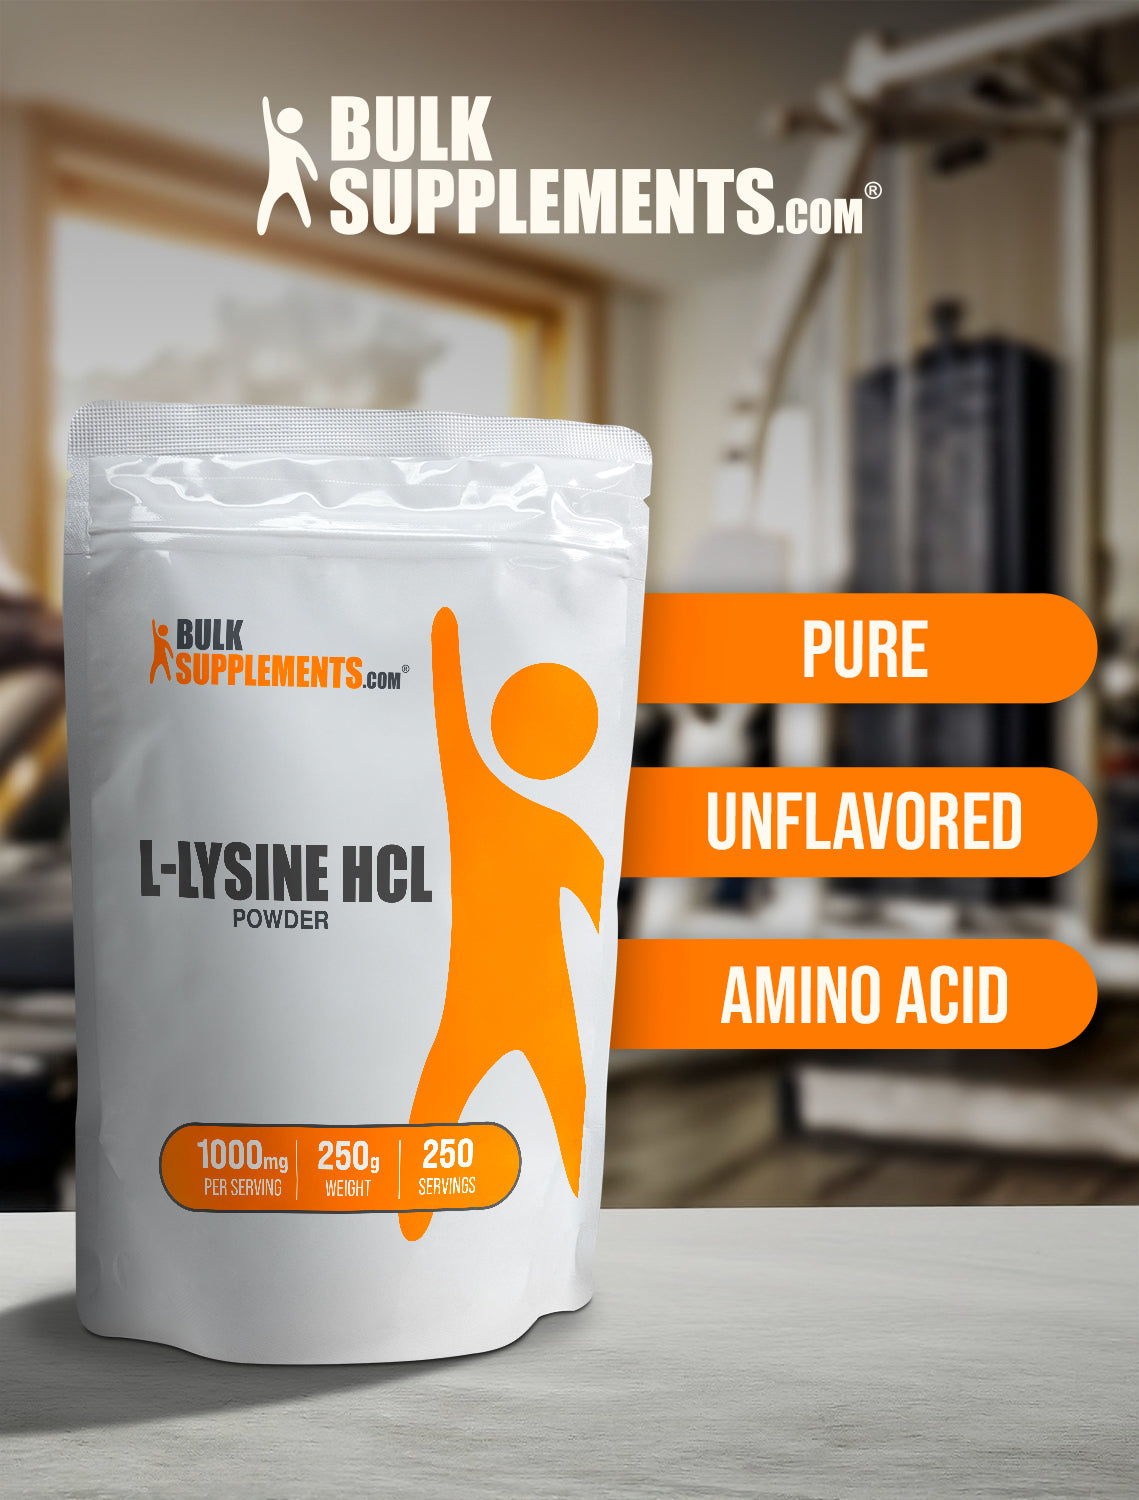 L-Lysine HCl powder 250g keywords image